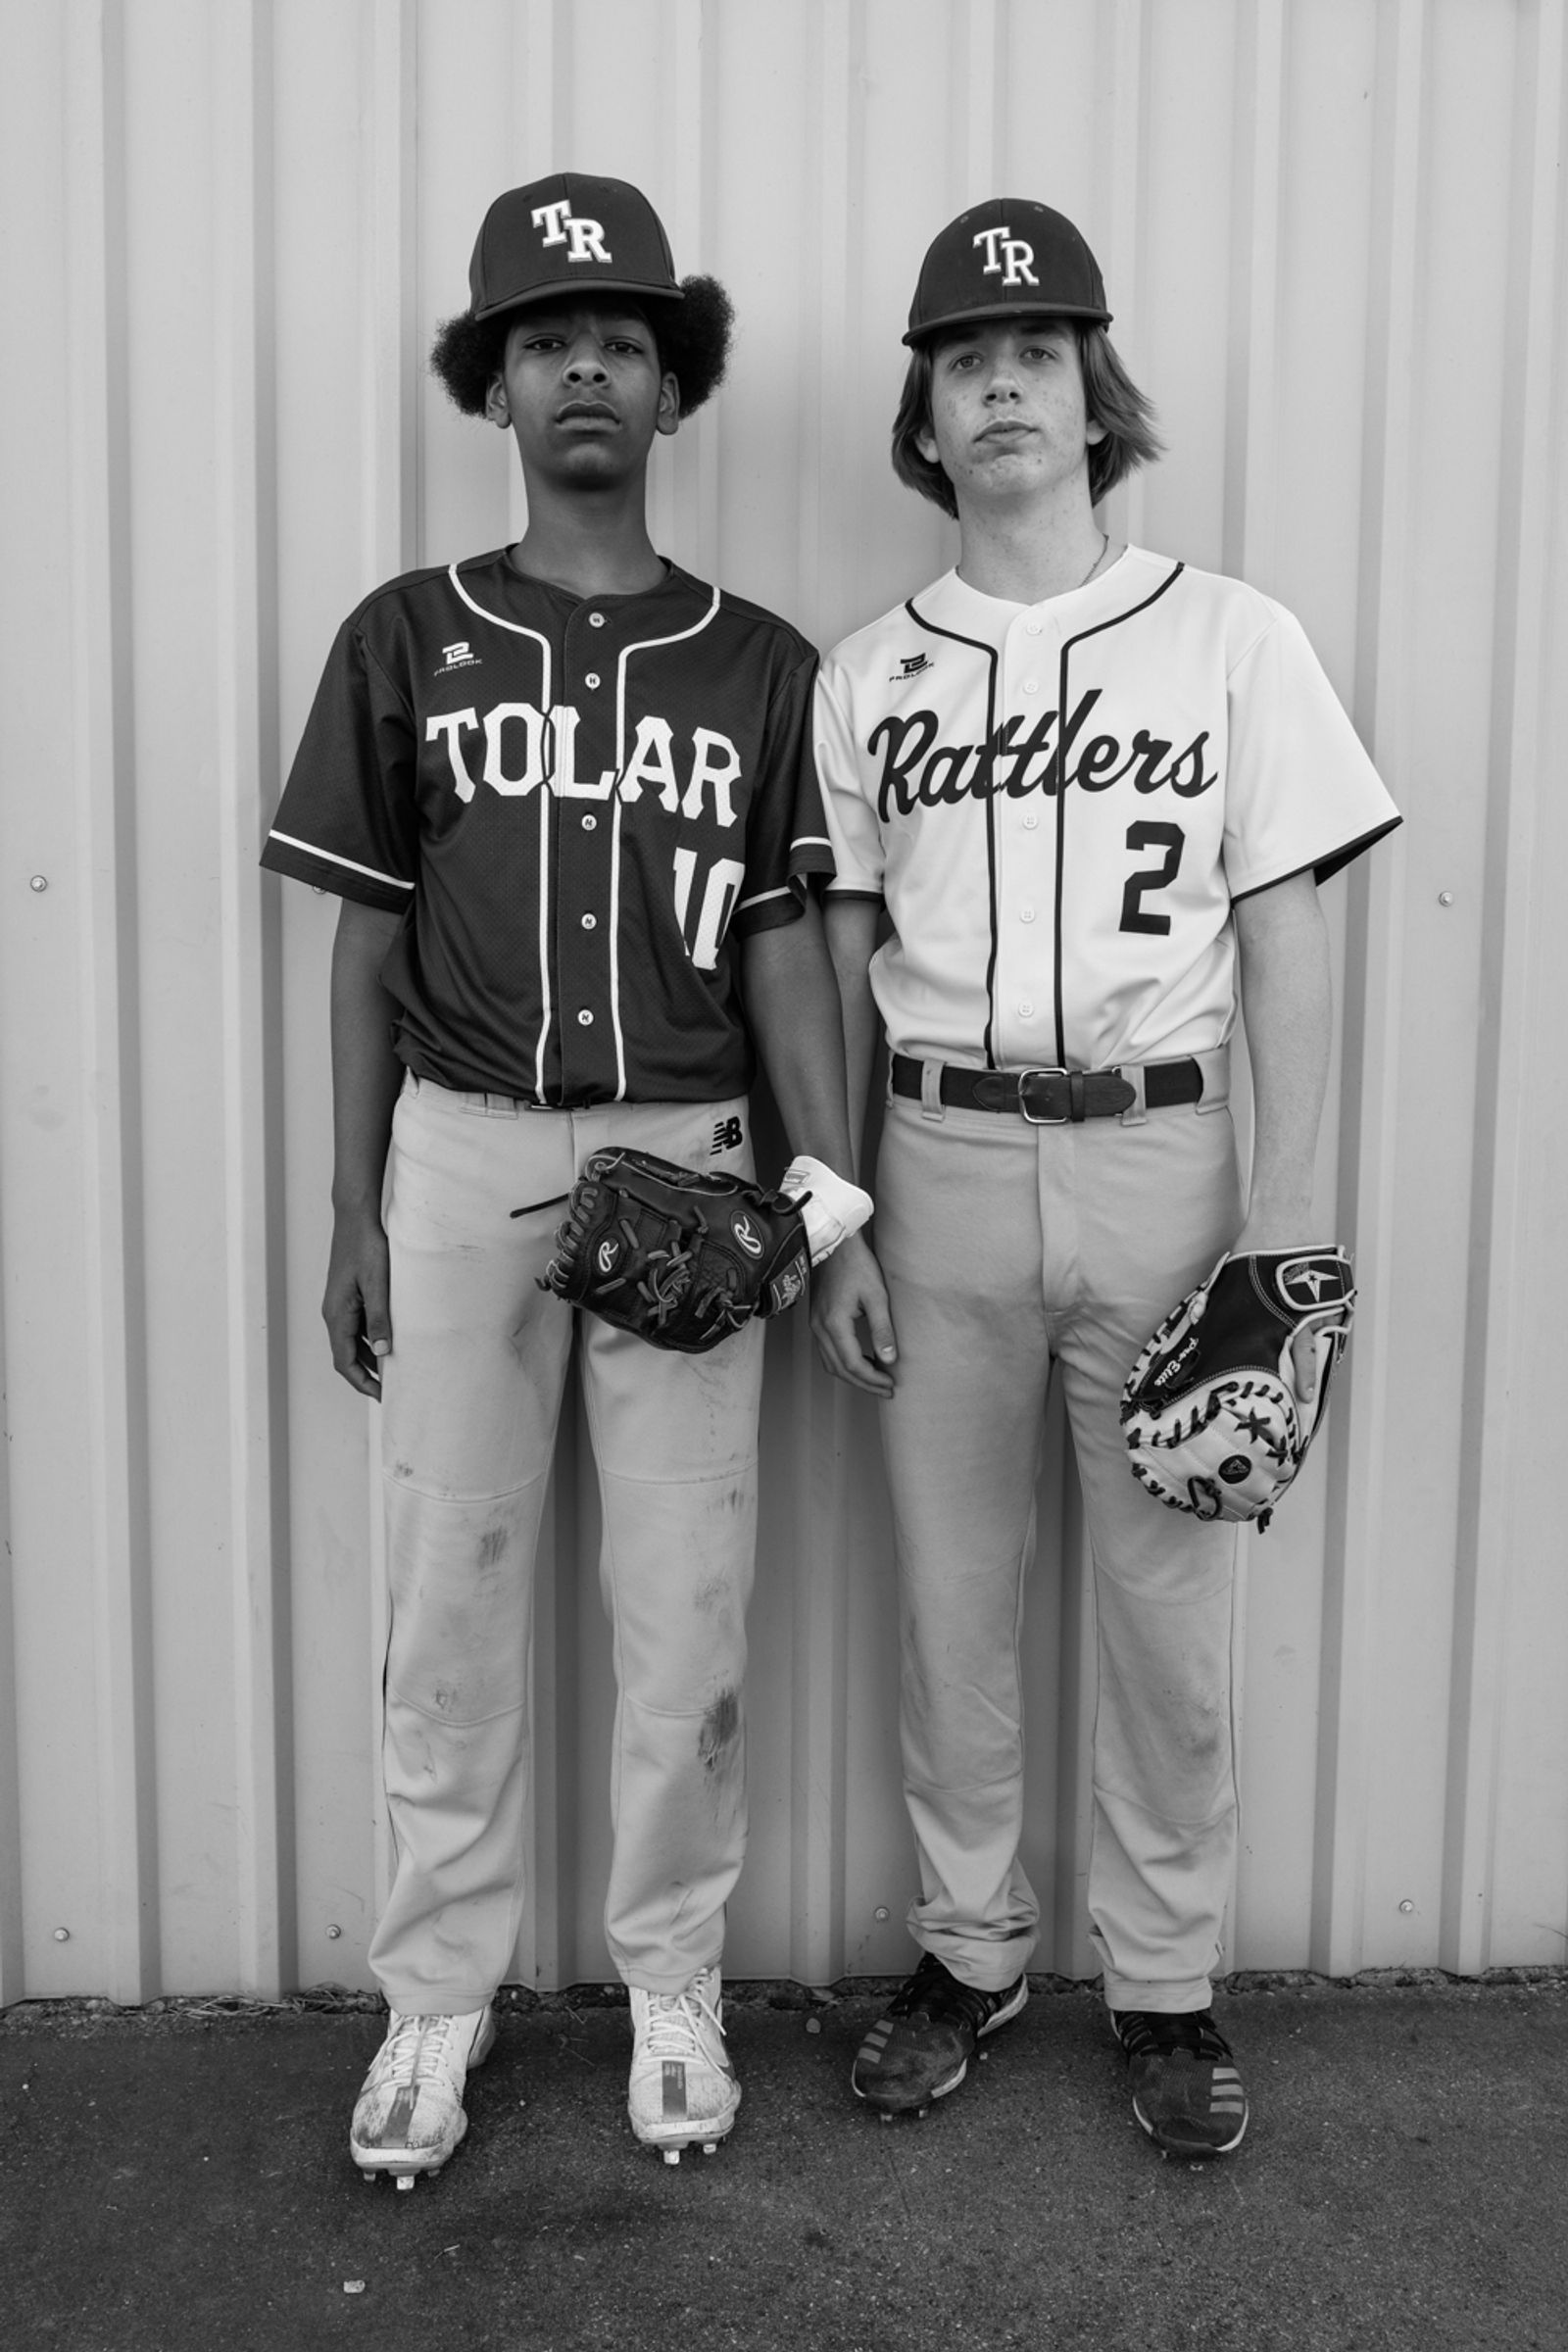 © Richard Sharum - Highschool Baseball Players After Practice. Tolar, Texas. 03.03.2021